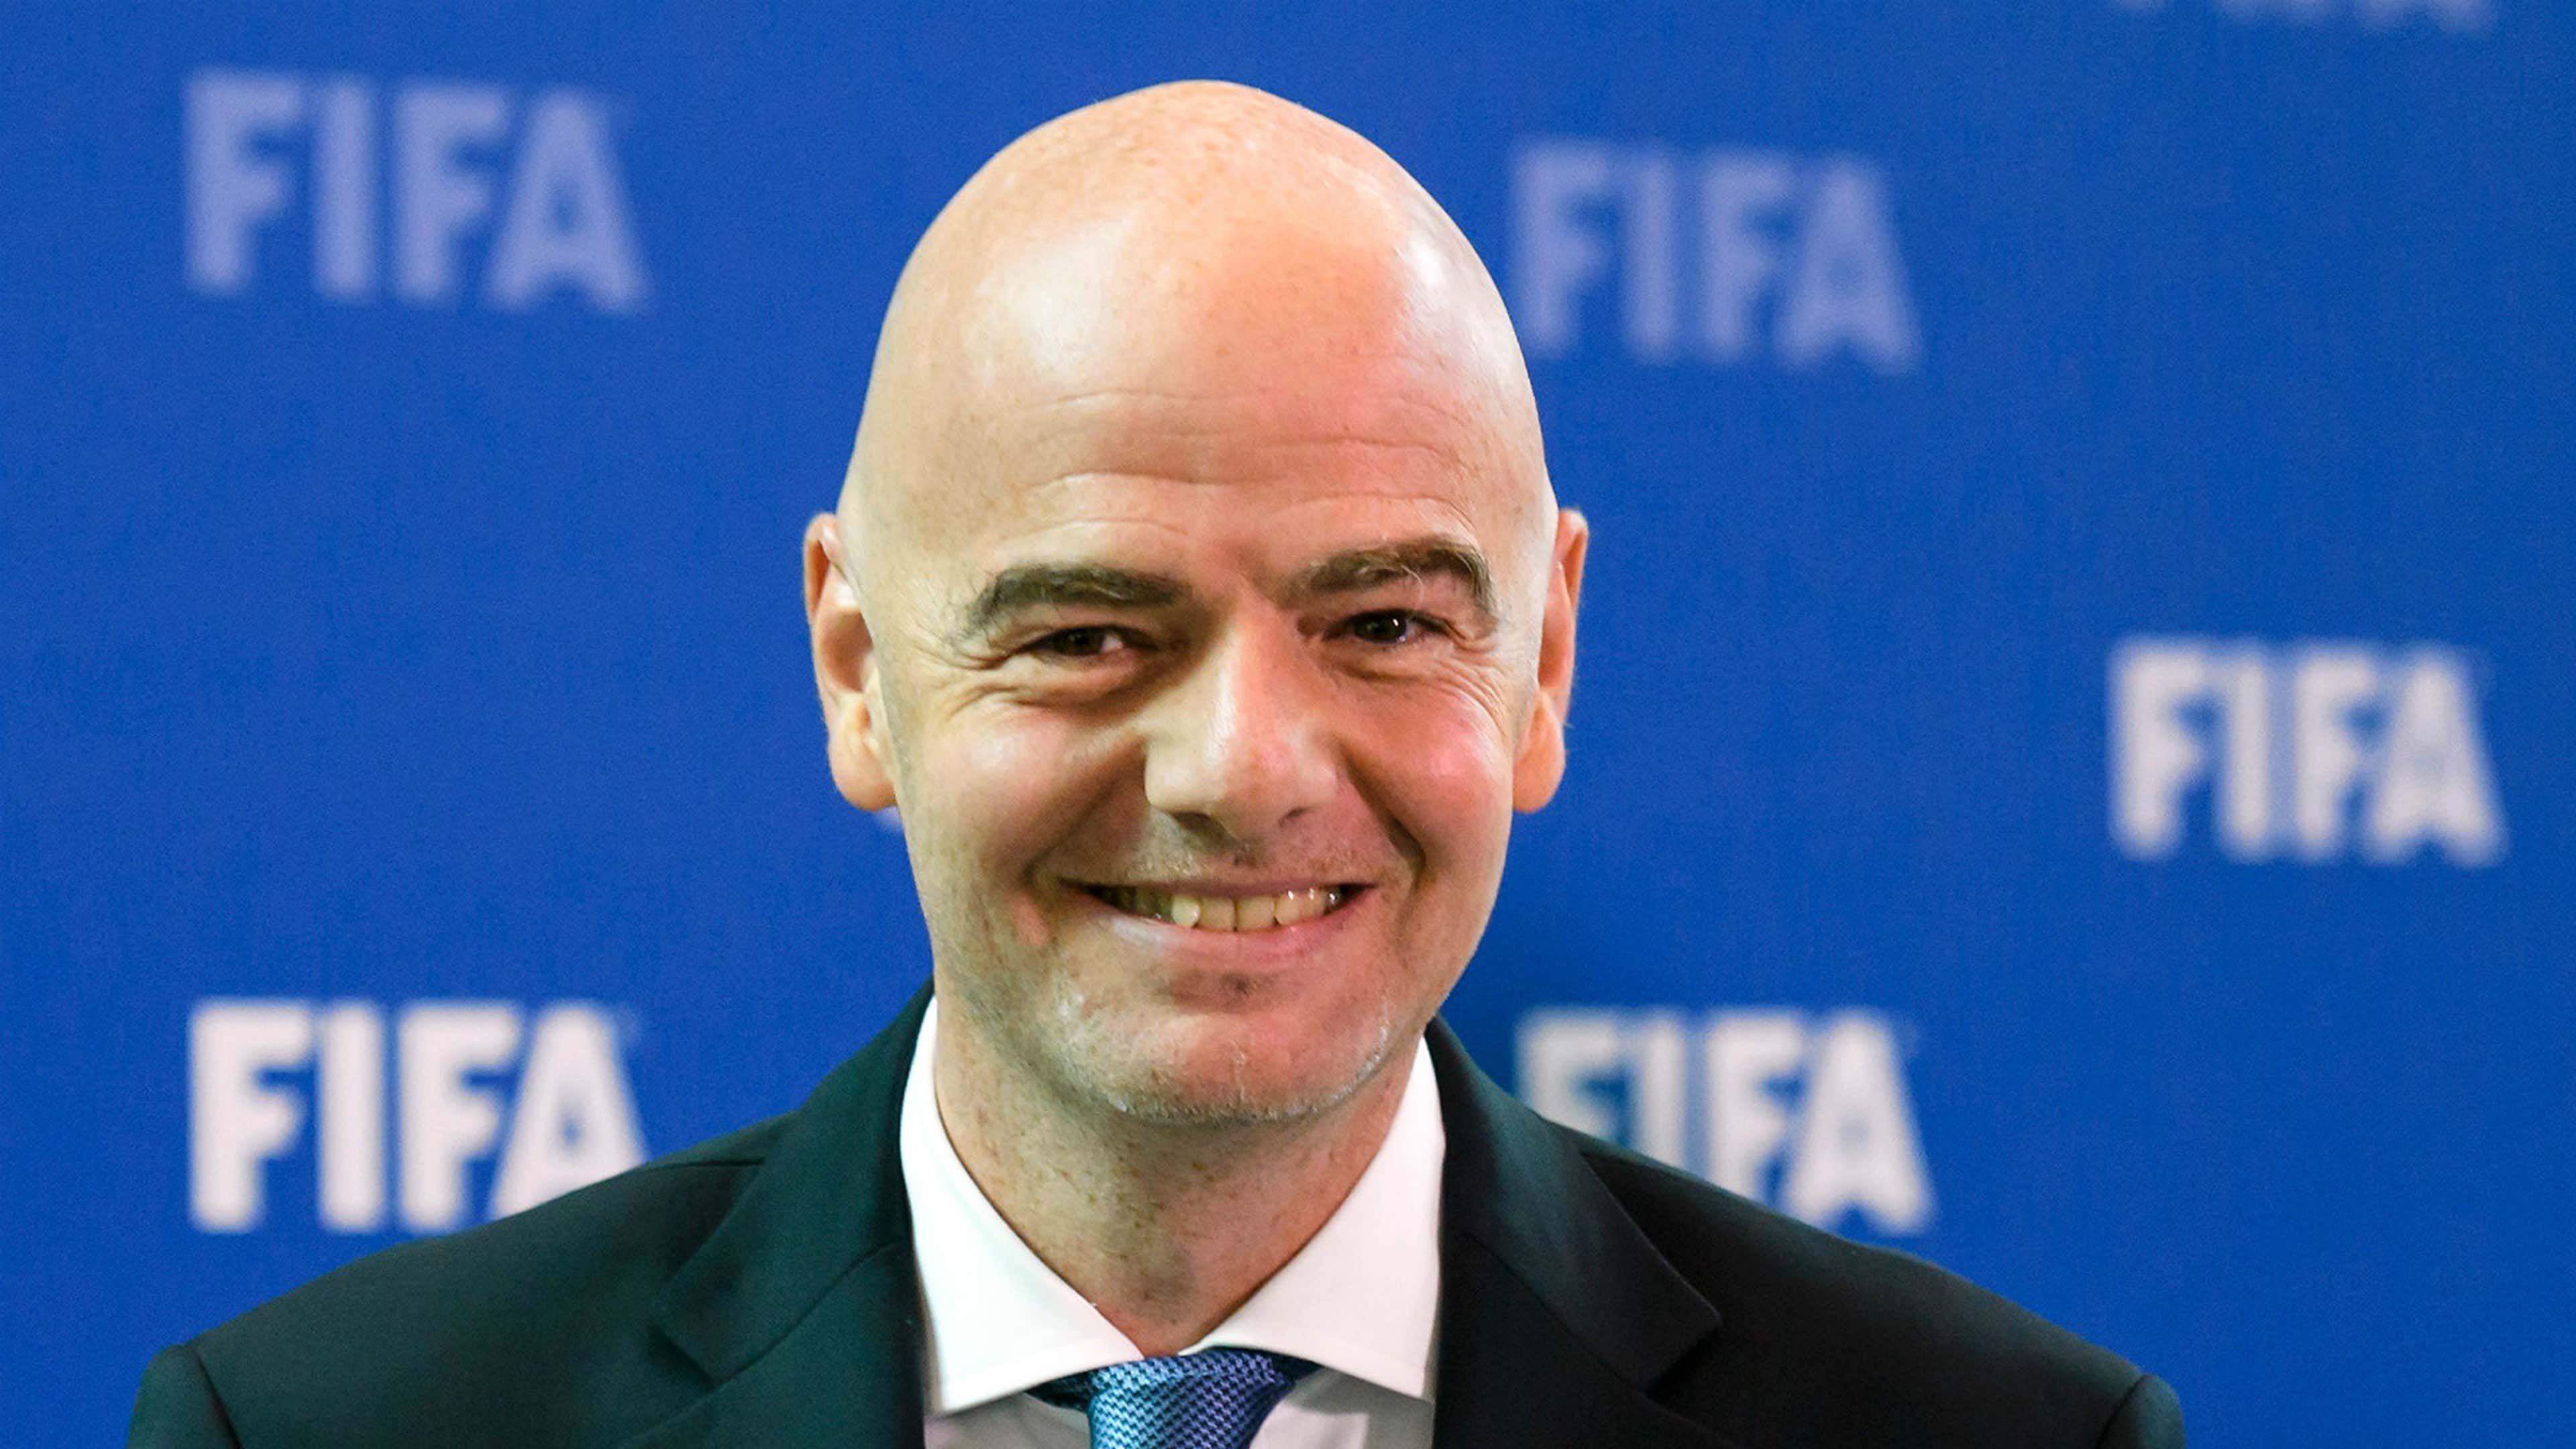 FIFA president Gianni Infantino to receive €1.66 million post-World Cup  bonus